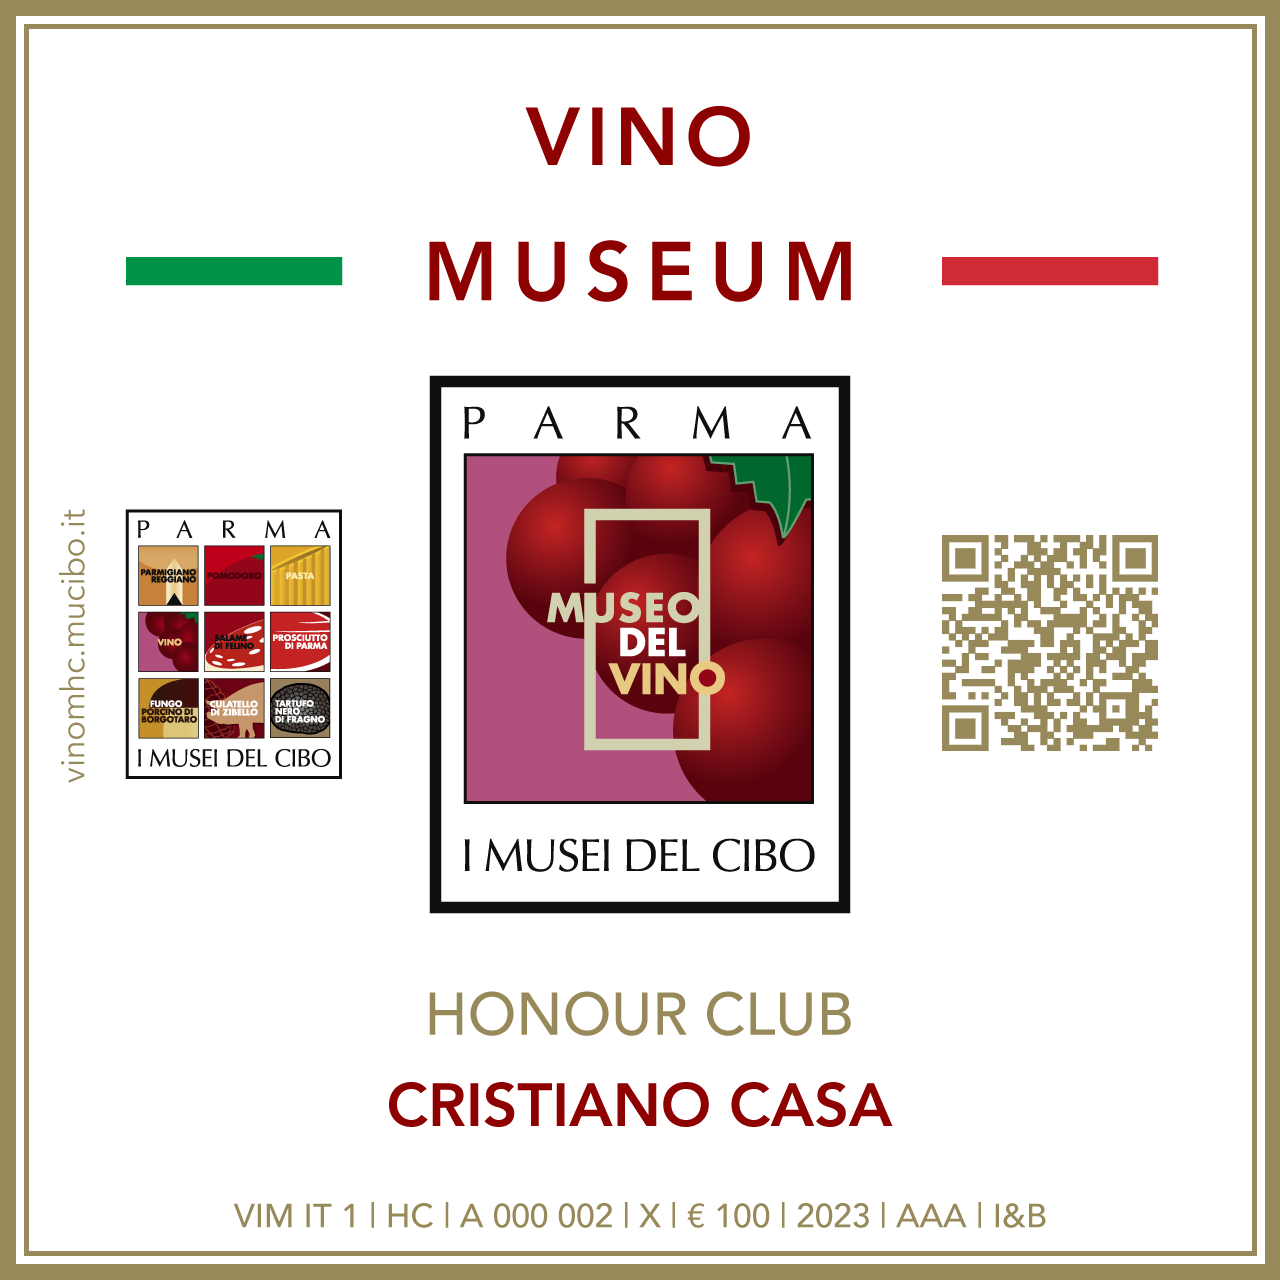 Vino Museum Honour Club - Token Id A 000 002 - CRISTIANO CASA